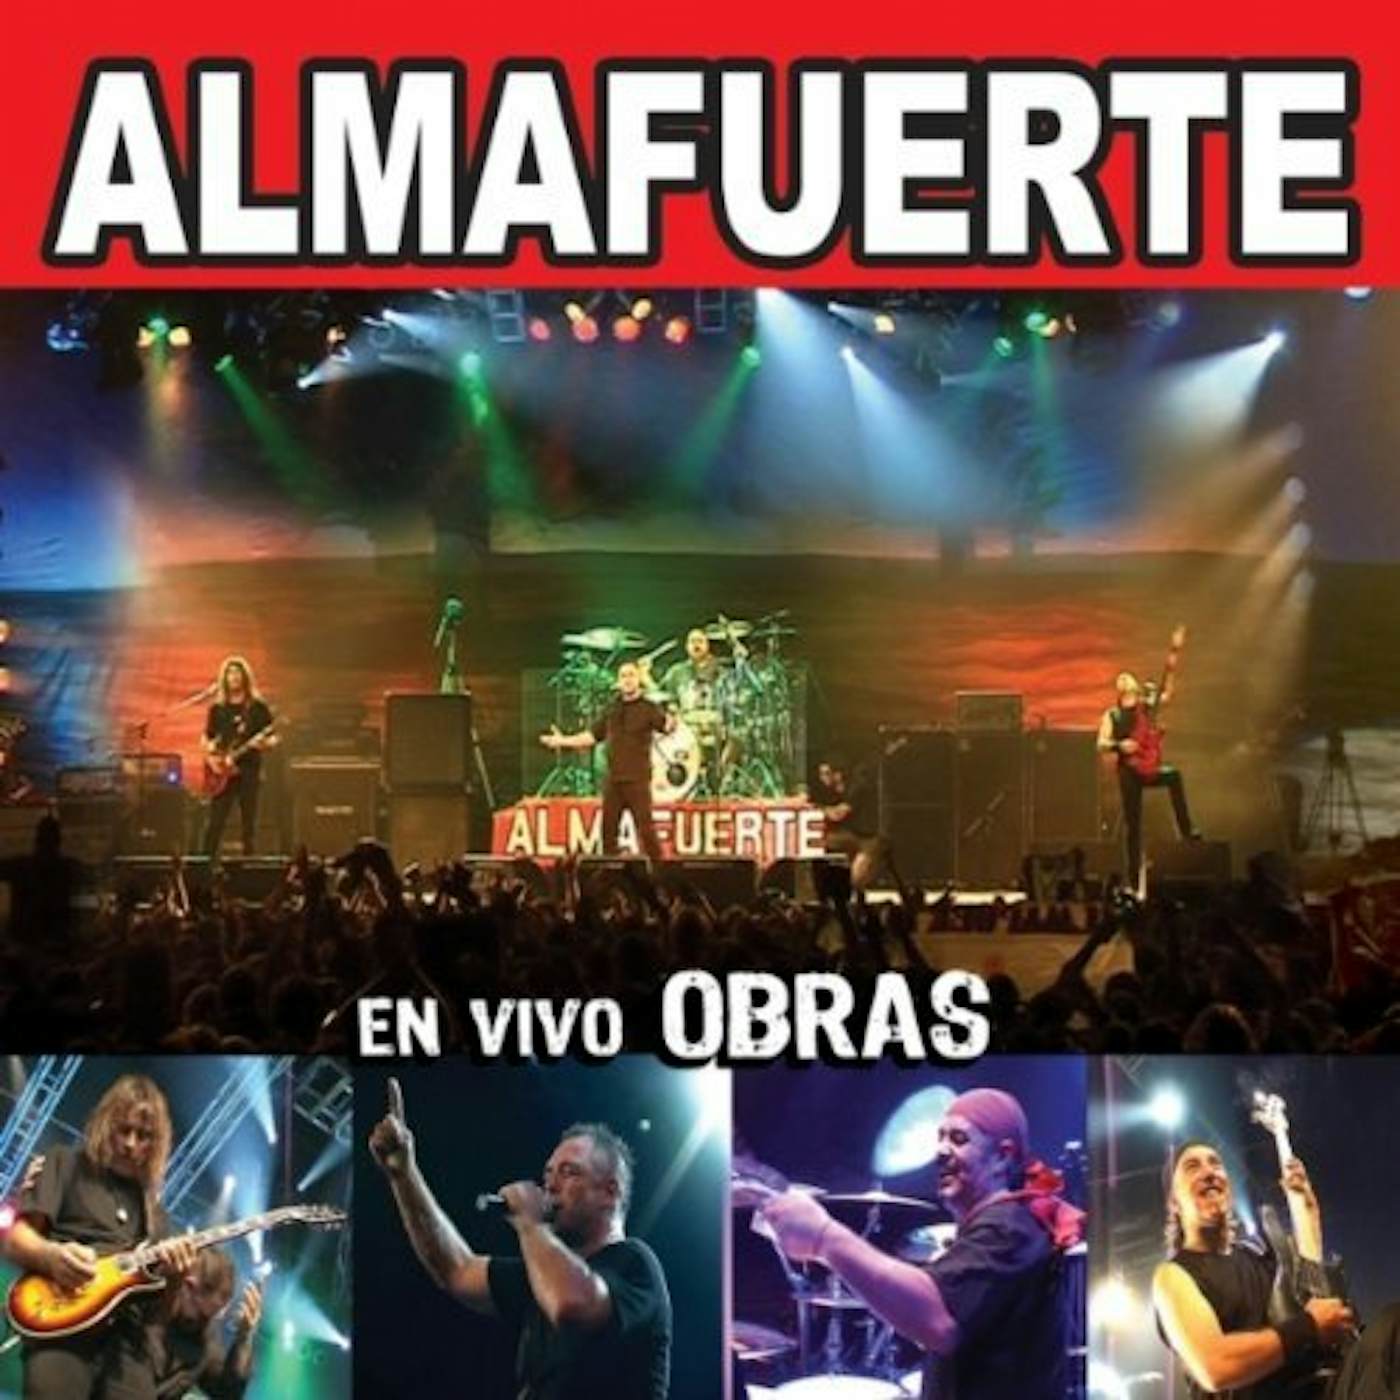 Almafuerte EN VIVO EN OBRAS CD